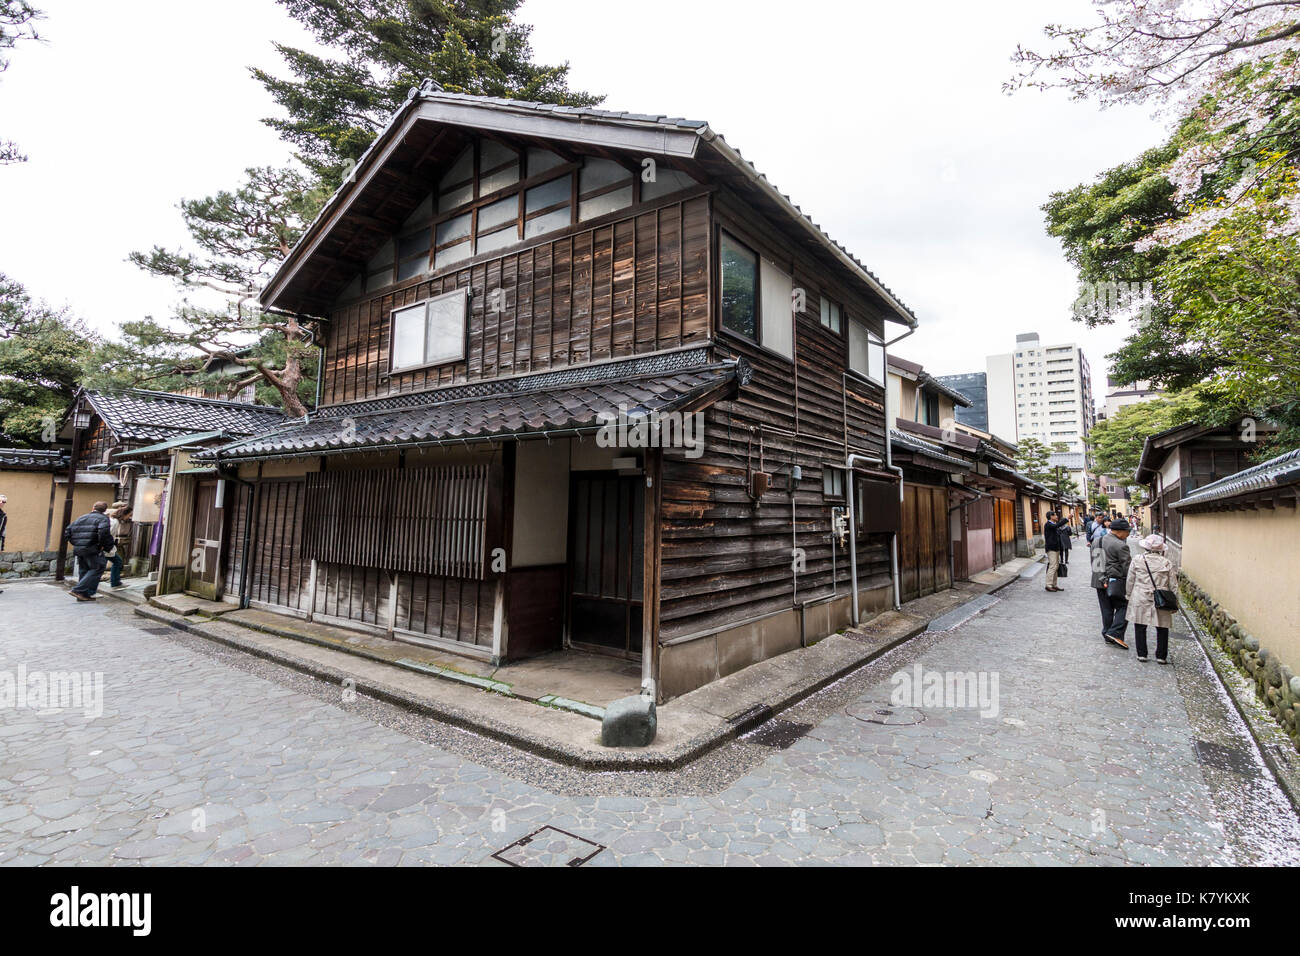 Japan, Kanazawa, Buke Yashiki tourist Districk, Naga-machi. Traditionall Japanese wooden house, corner view, with people walking. Stock Photo